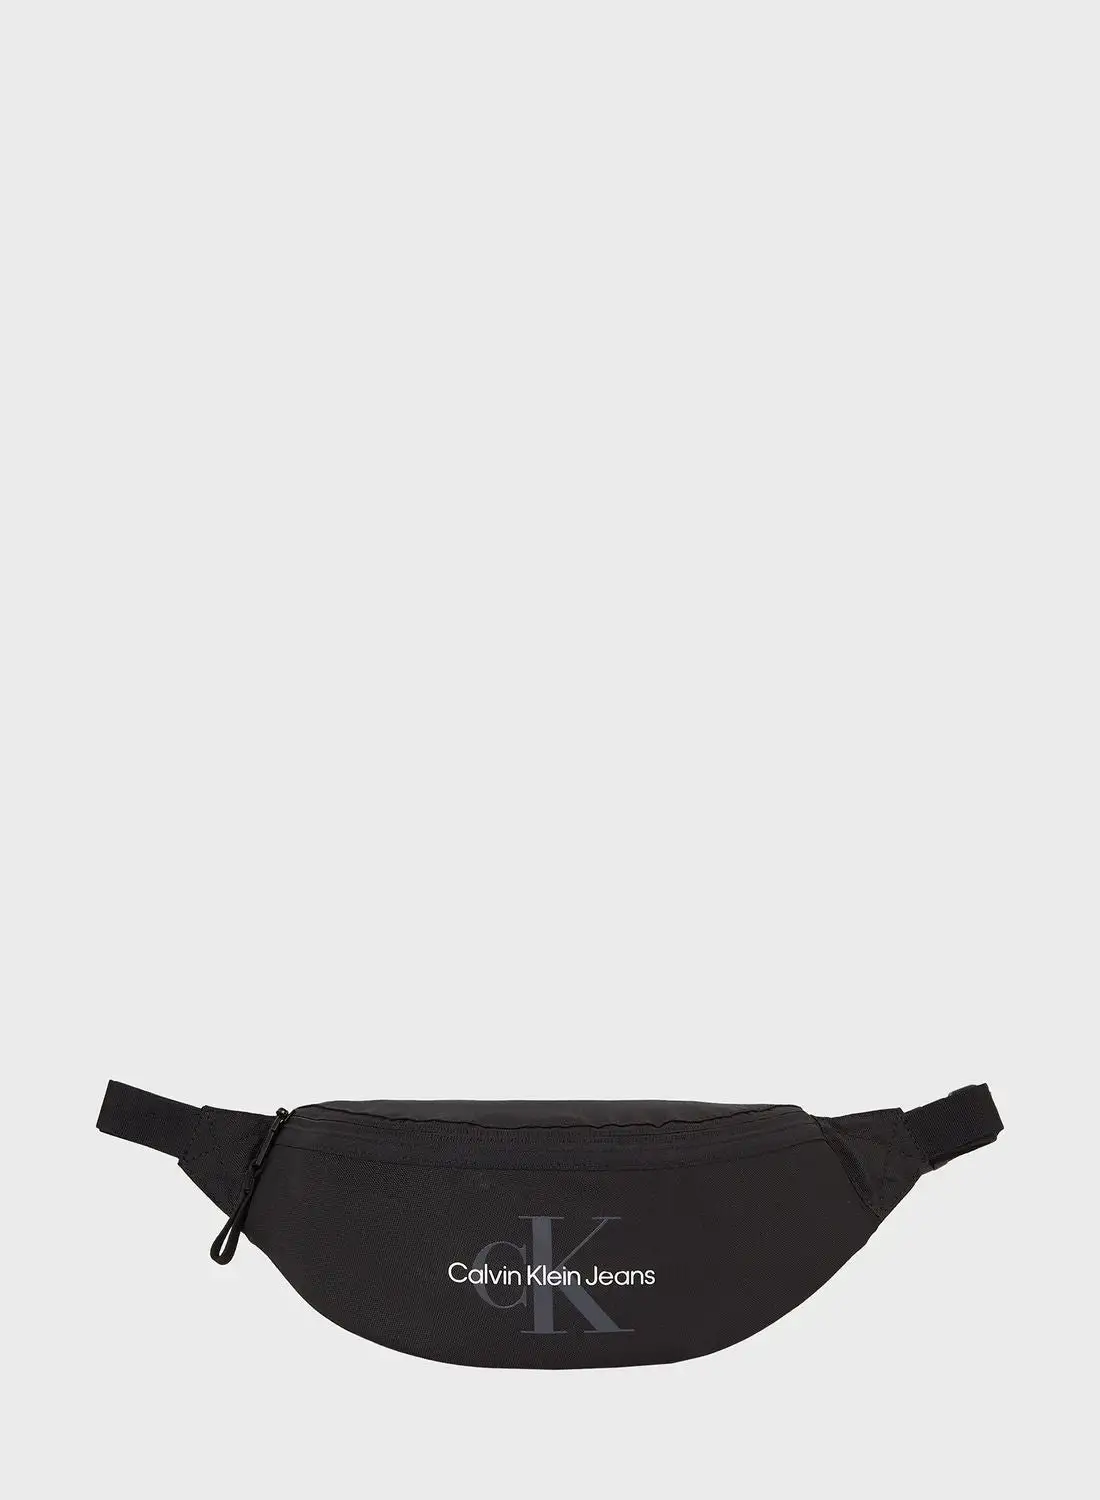 Calvin Klein Jeans Monogram zip over Waist Bag